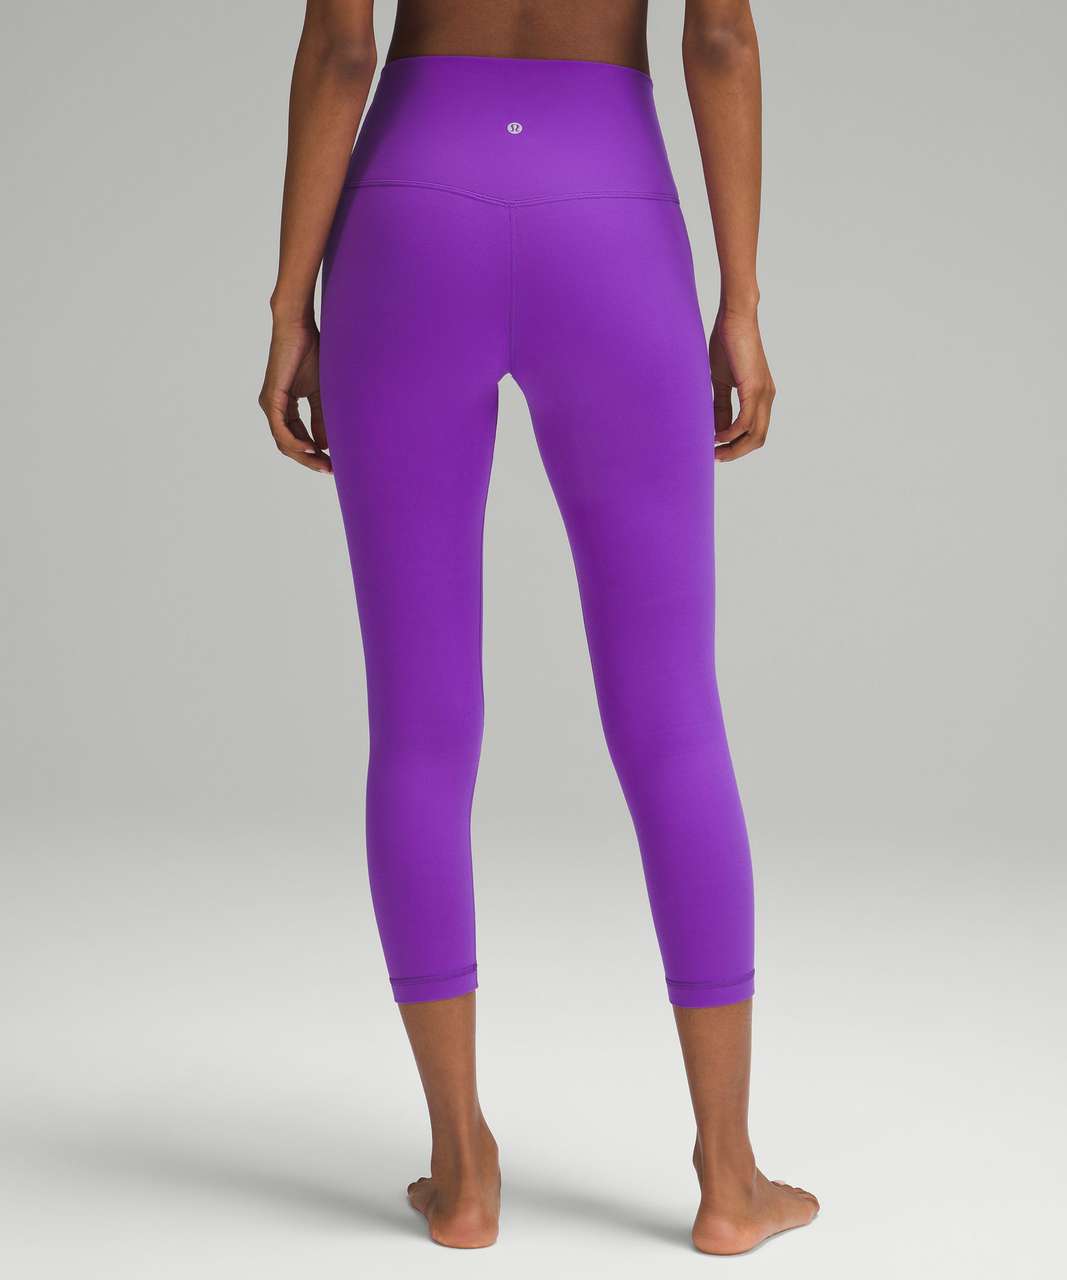 Lululemon Purple Floral Adjustable Sports Wear Activewear Women's Size 8